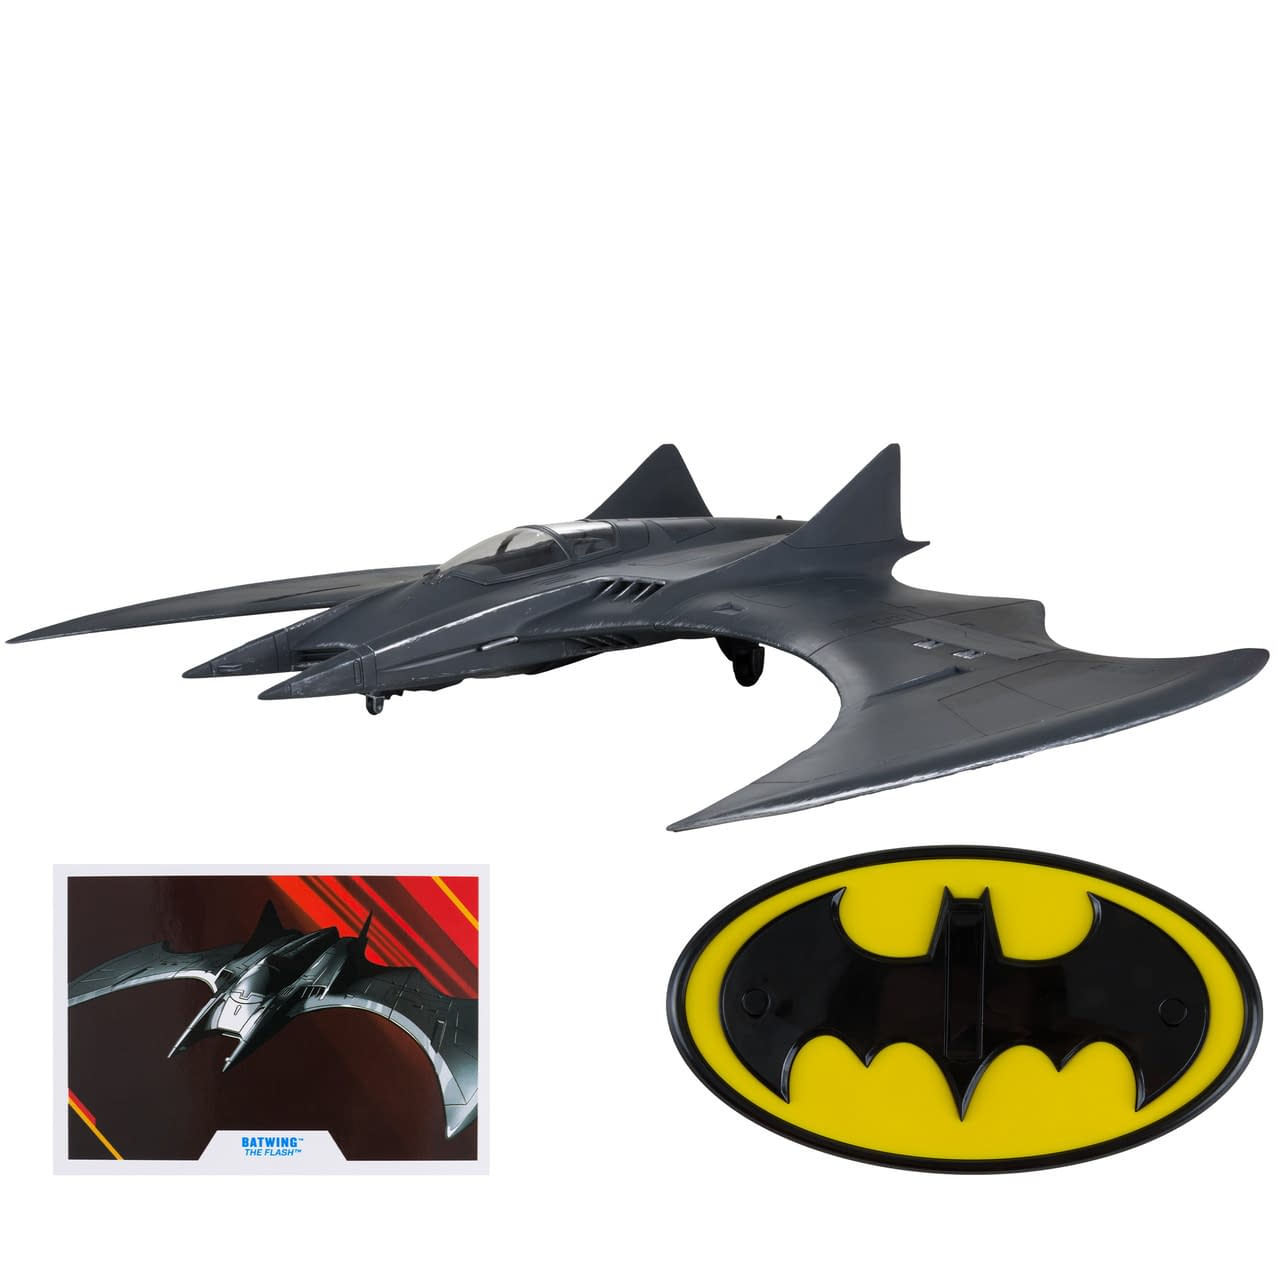 McFarlane Toys Reveals Exclusive $250 The Flash Batman 89' Batwing 